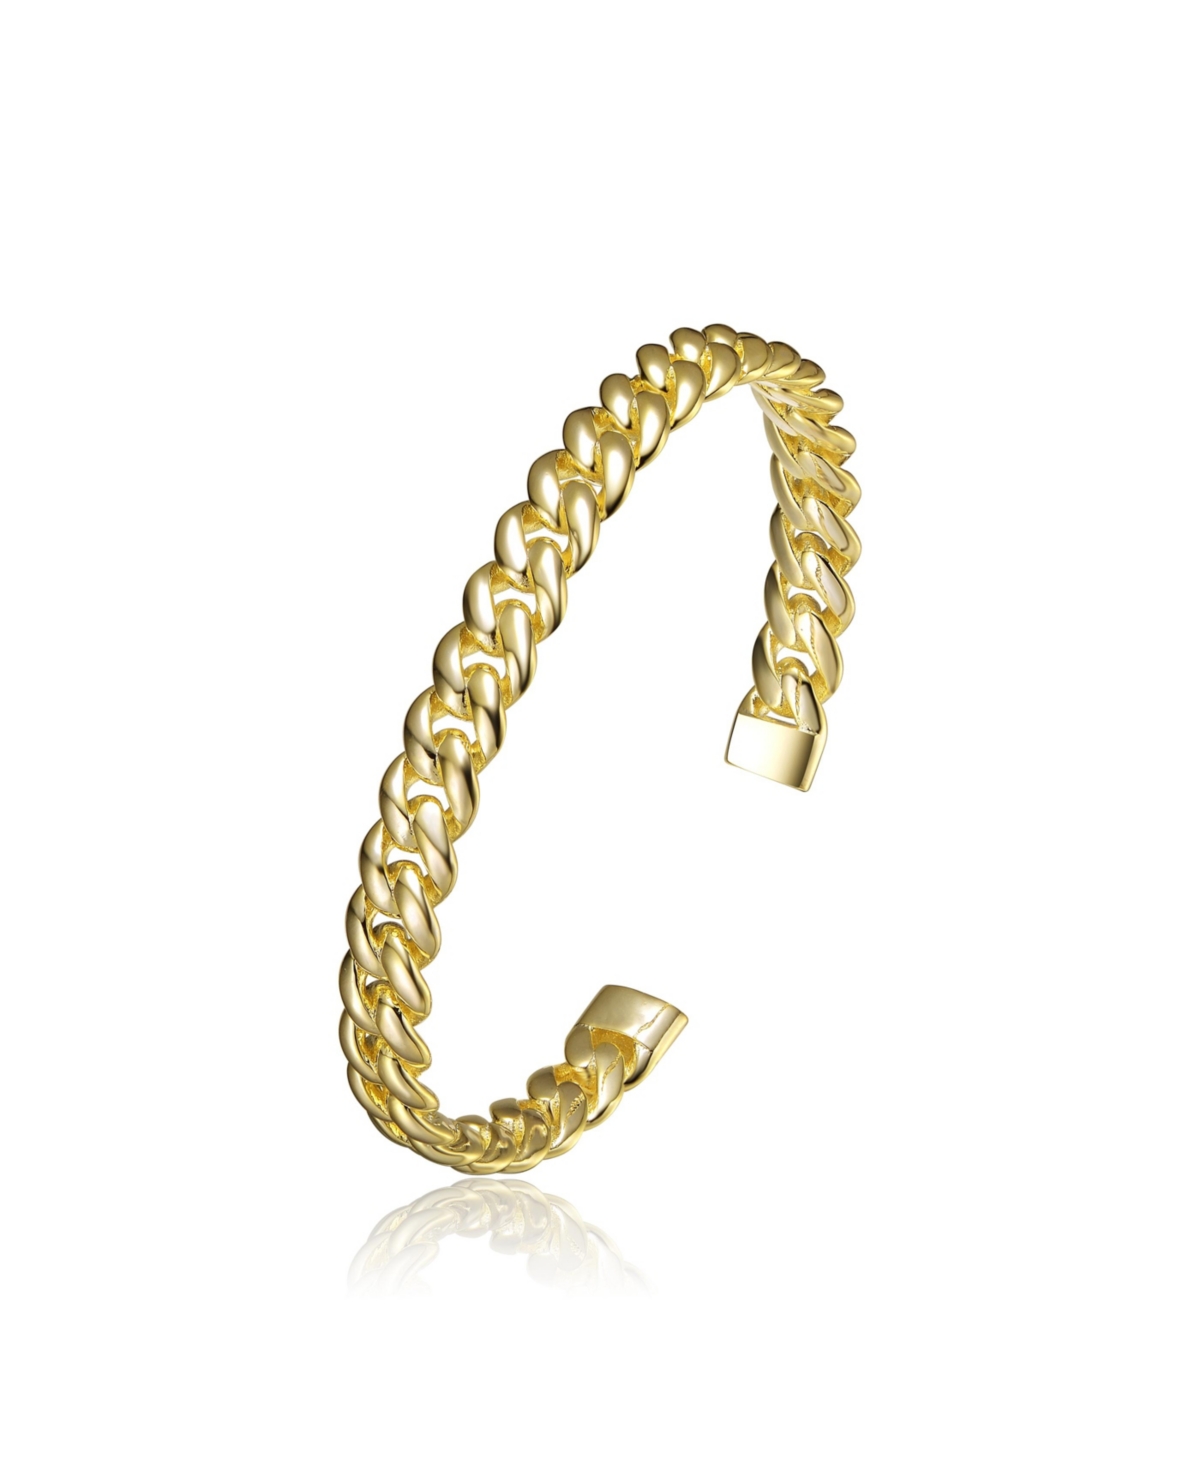 Elegant 14K Gold Plated Chain Cuff Bracelet - Gold